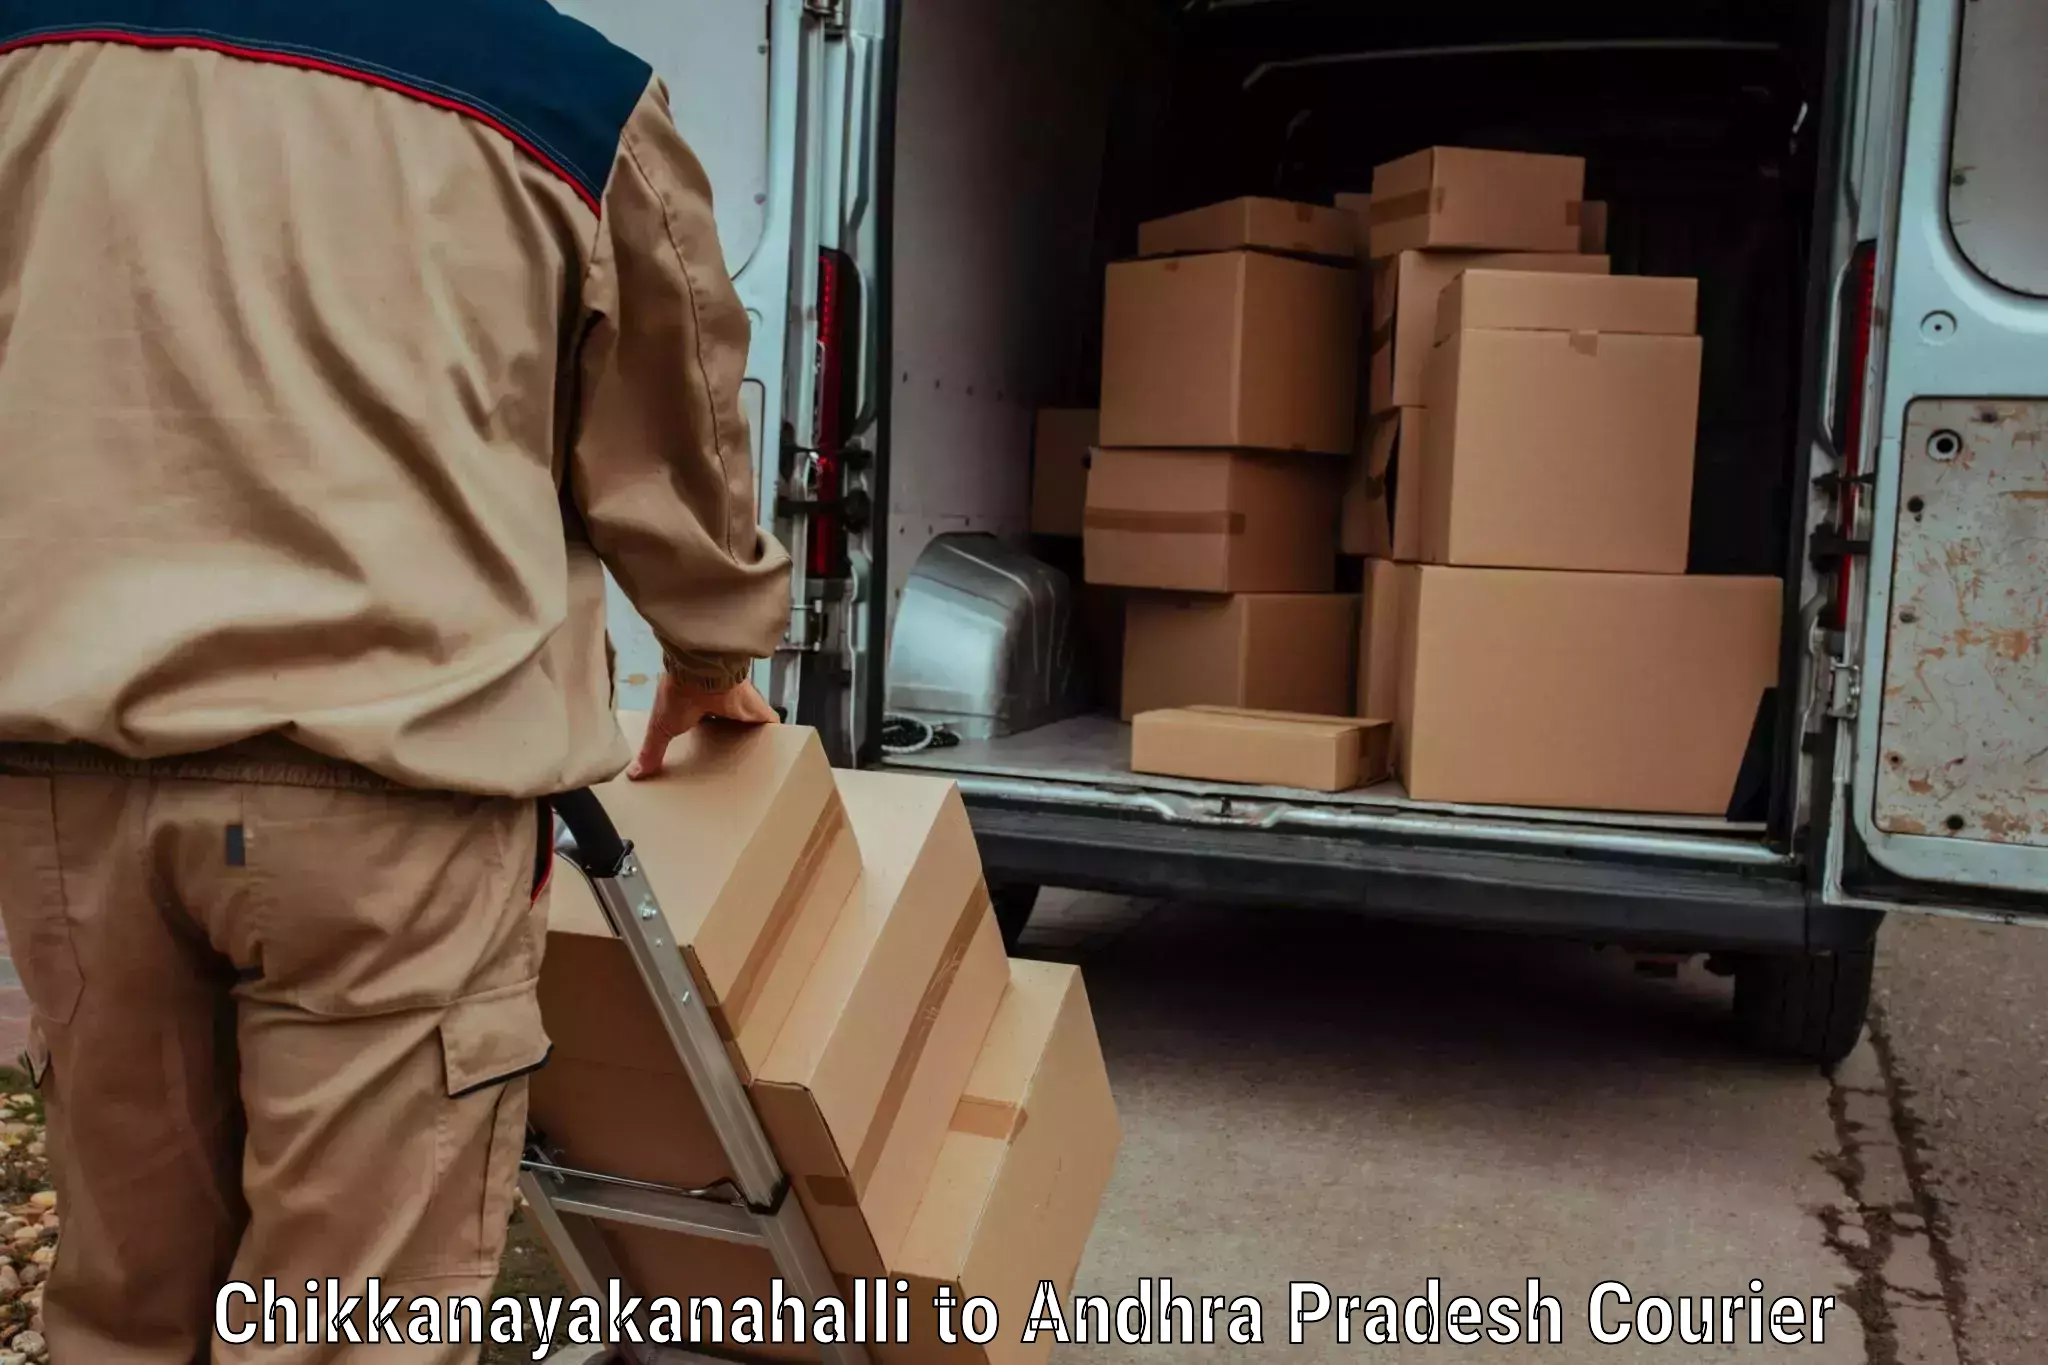 Reliable delivery network Chikkanayakanahalli to Jaggayyapet